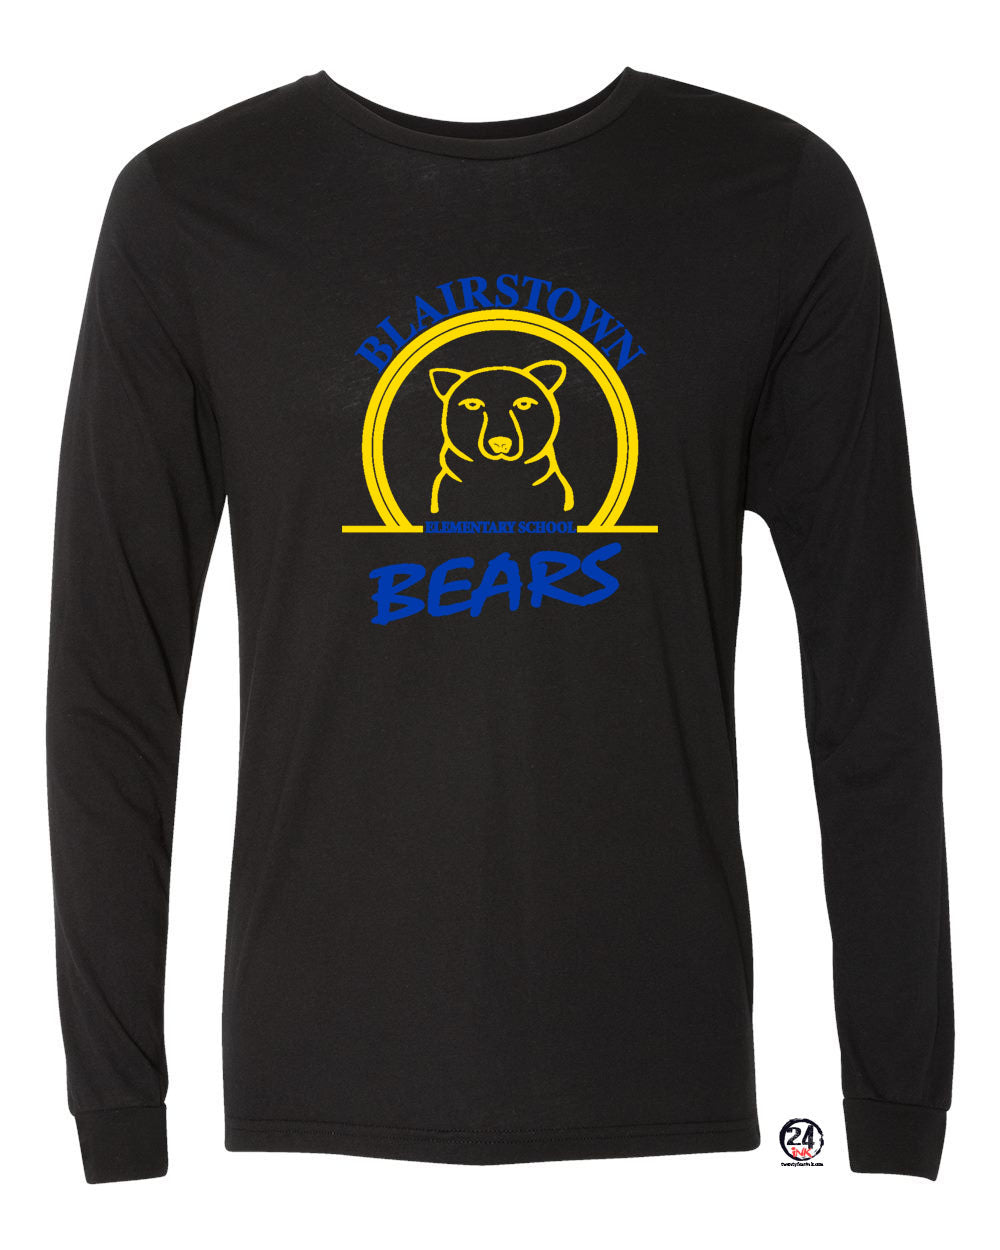 Bears design 10 Long Sleeve Shirt